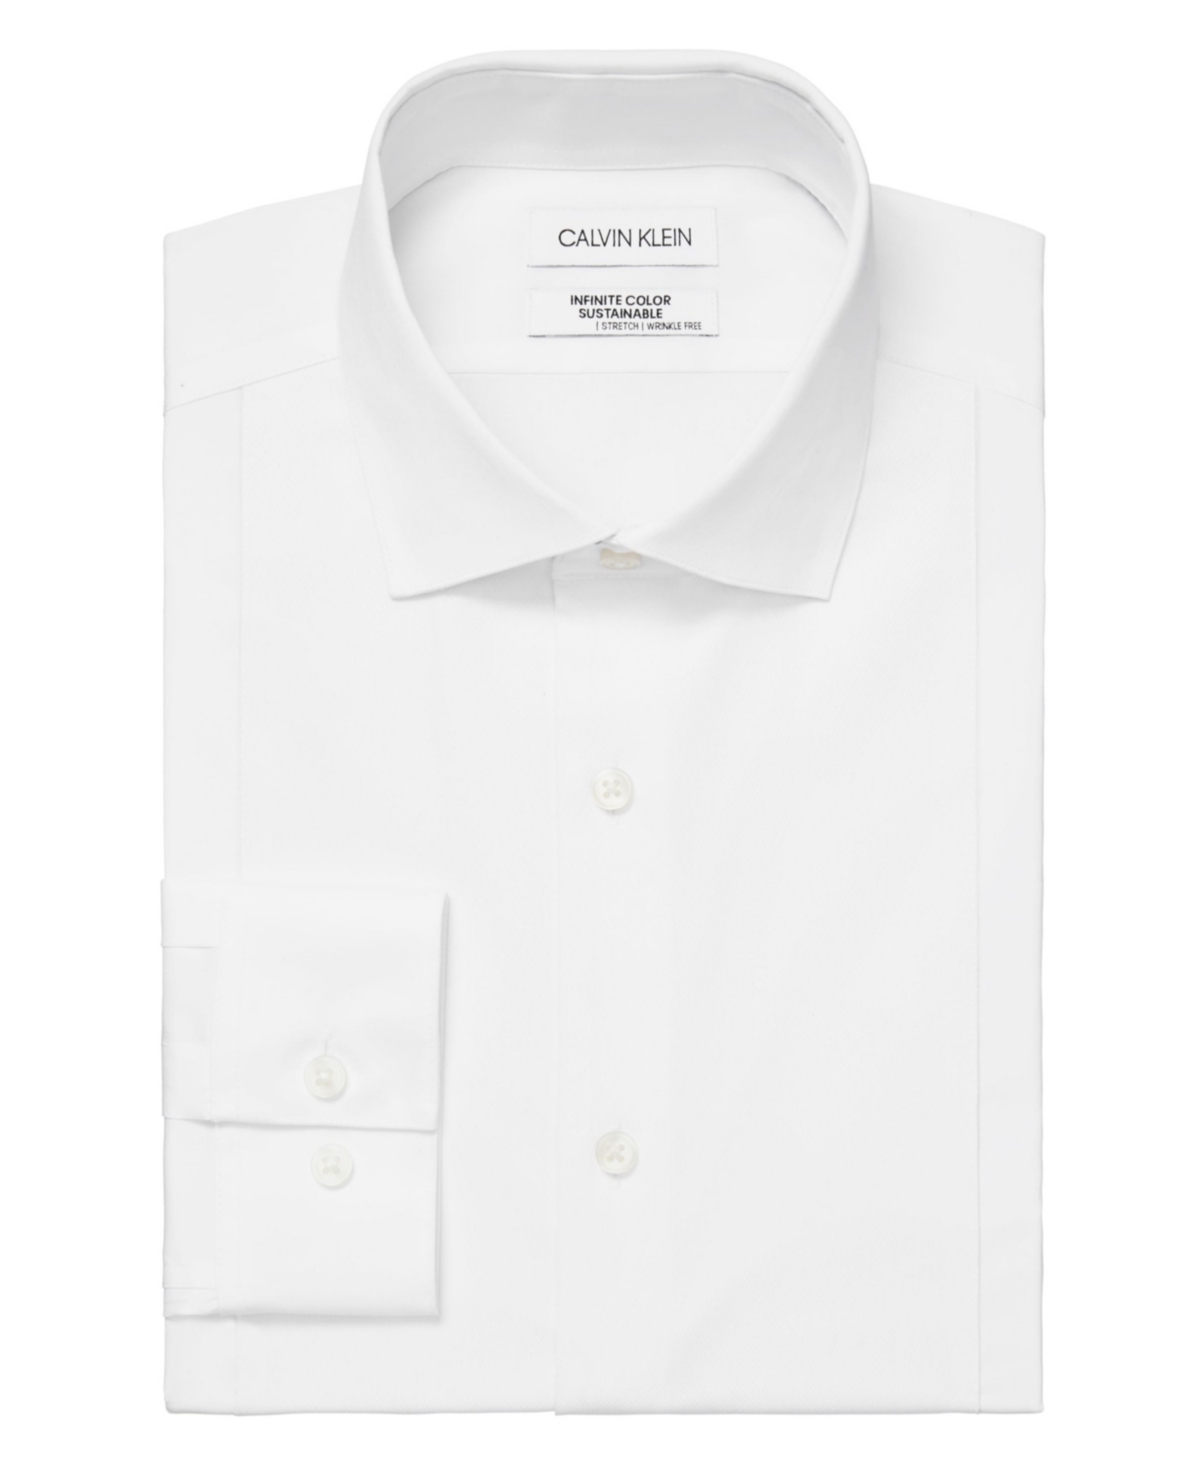 Calvin Klein Men's Infinite Color Regular Fit Dress Shirt In White